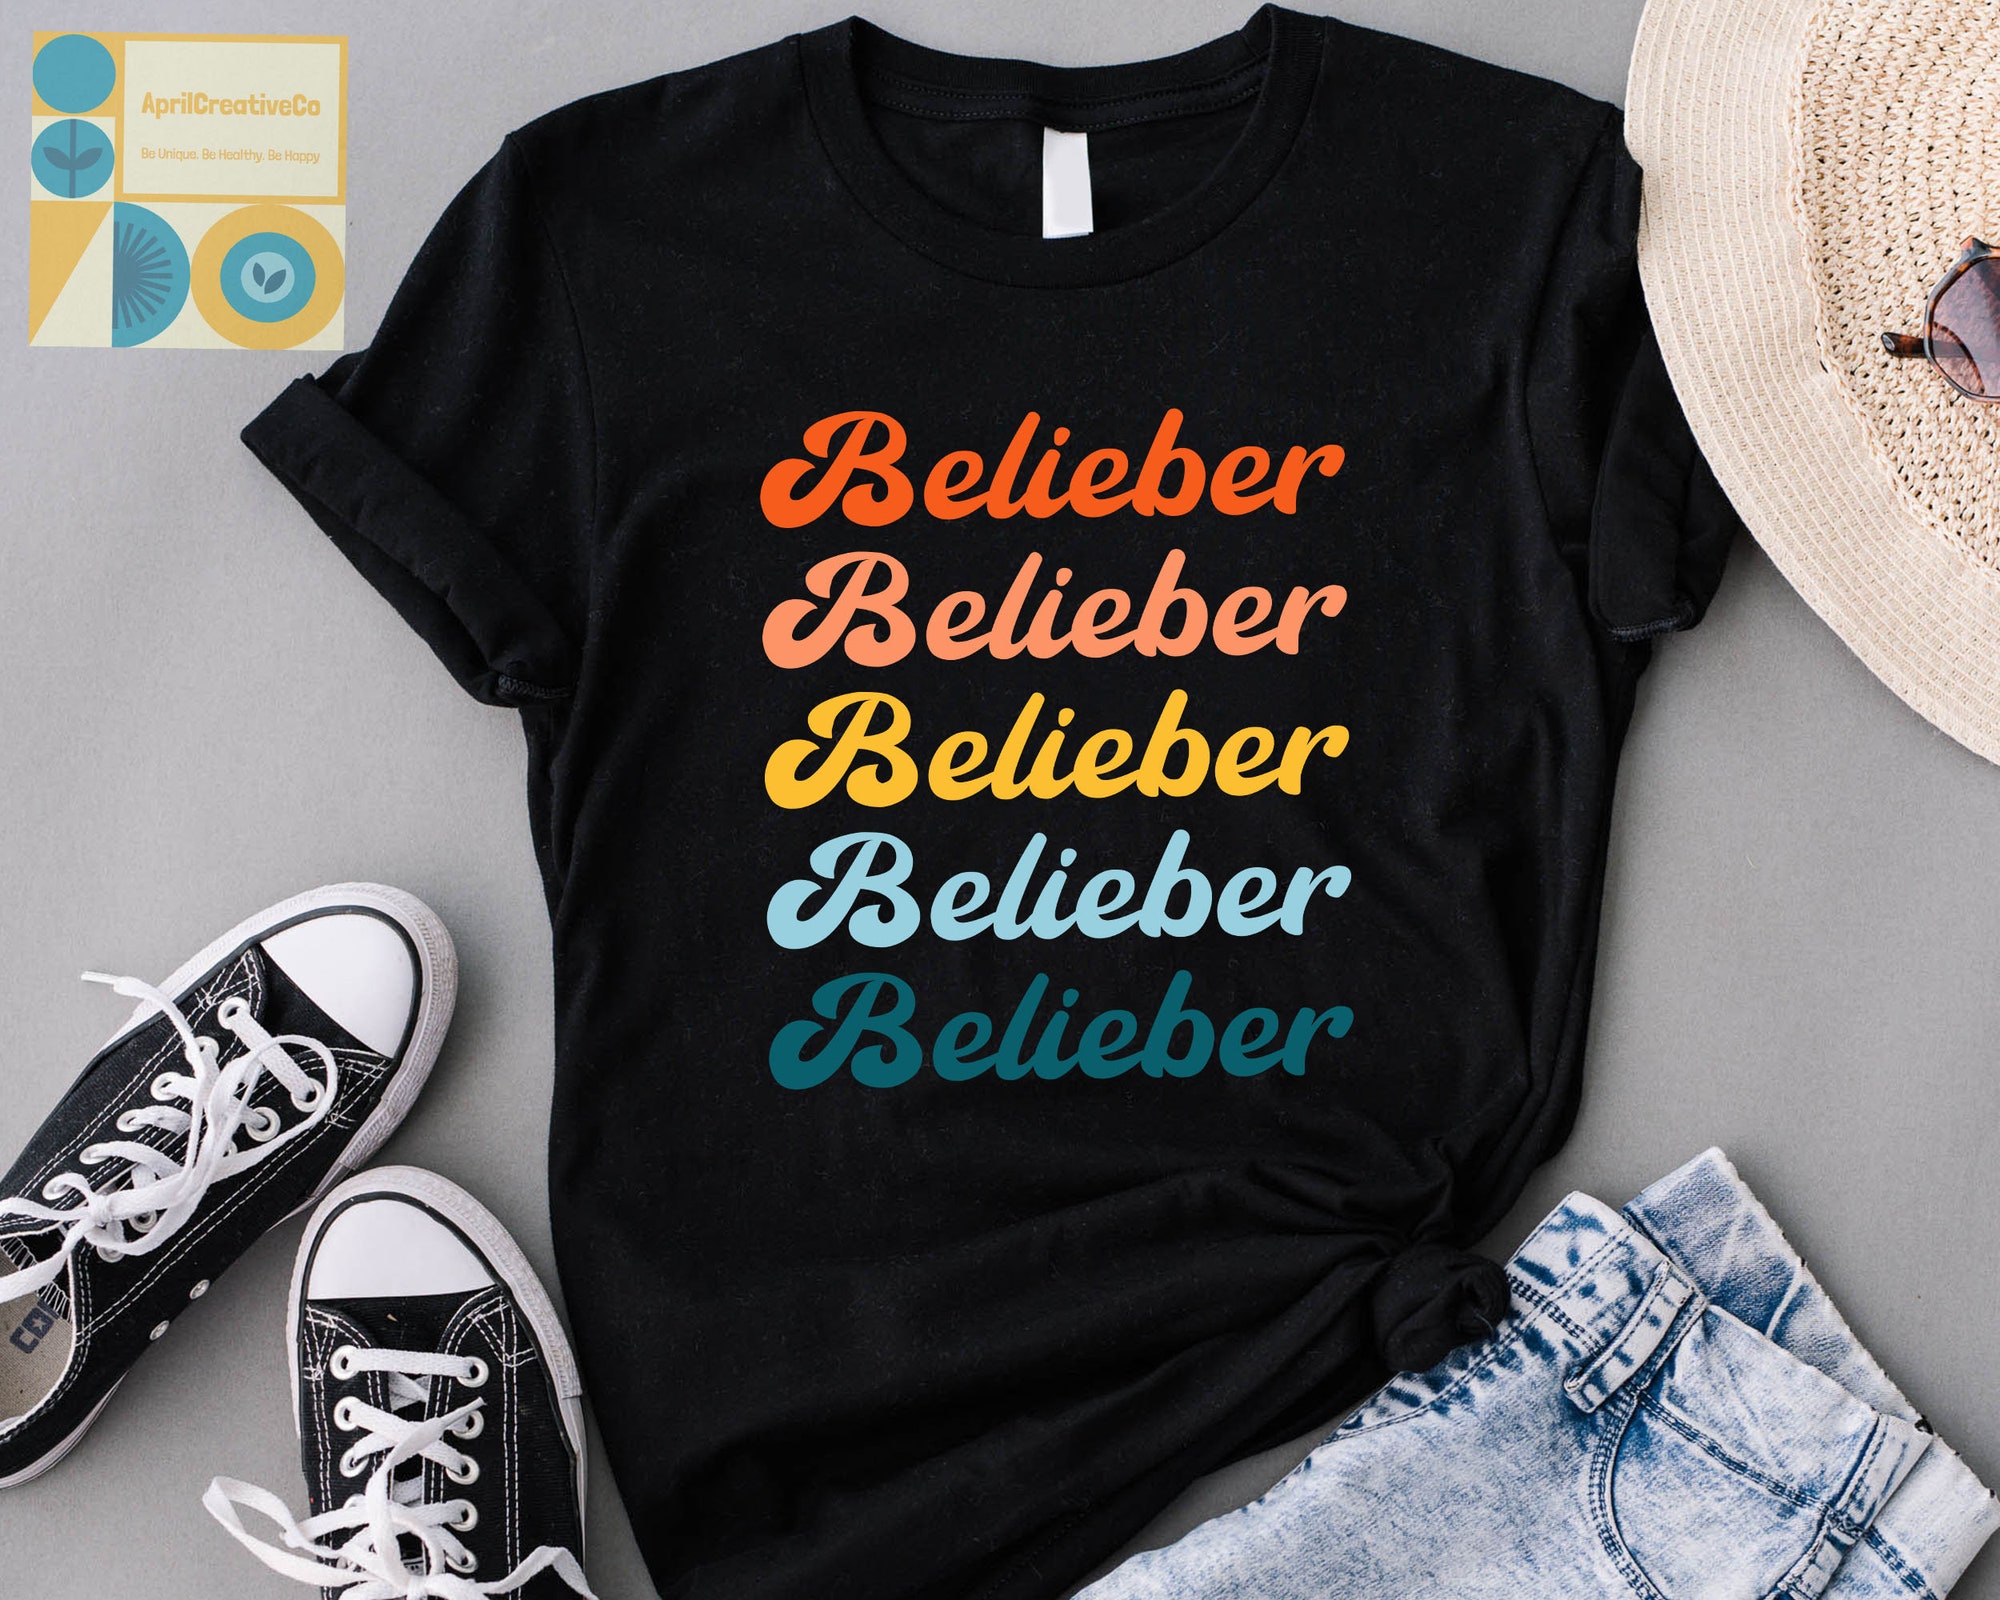 Discover Maglietta T-Shirt Bieber Justin Uomo Donna Bambini - Design Vintage Belieber